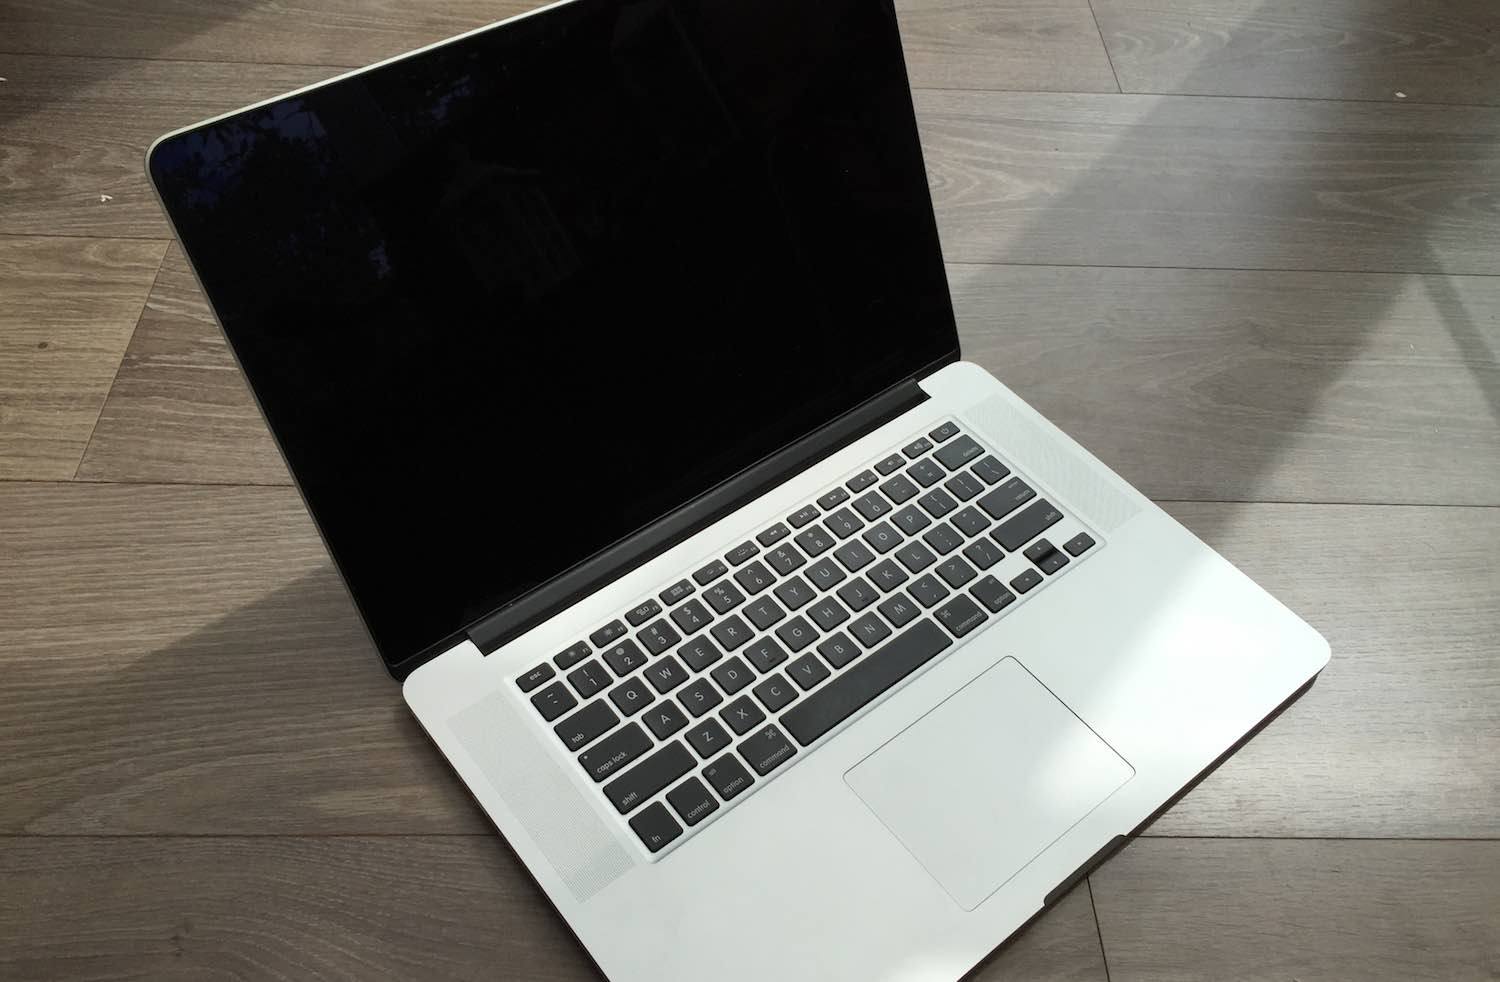 Apple MacBook Pro with Retina display 2013 15 review